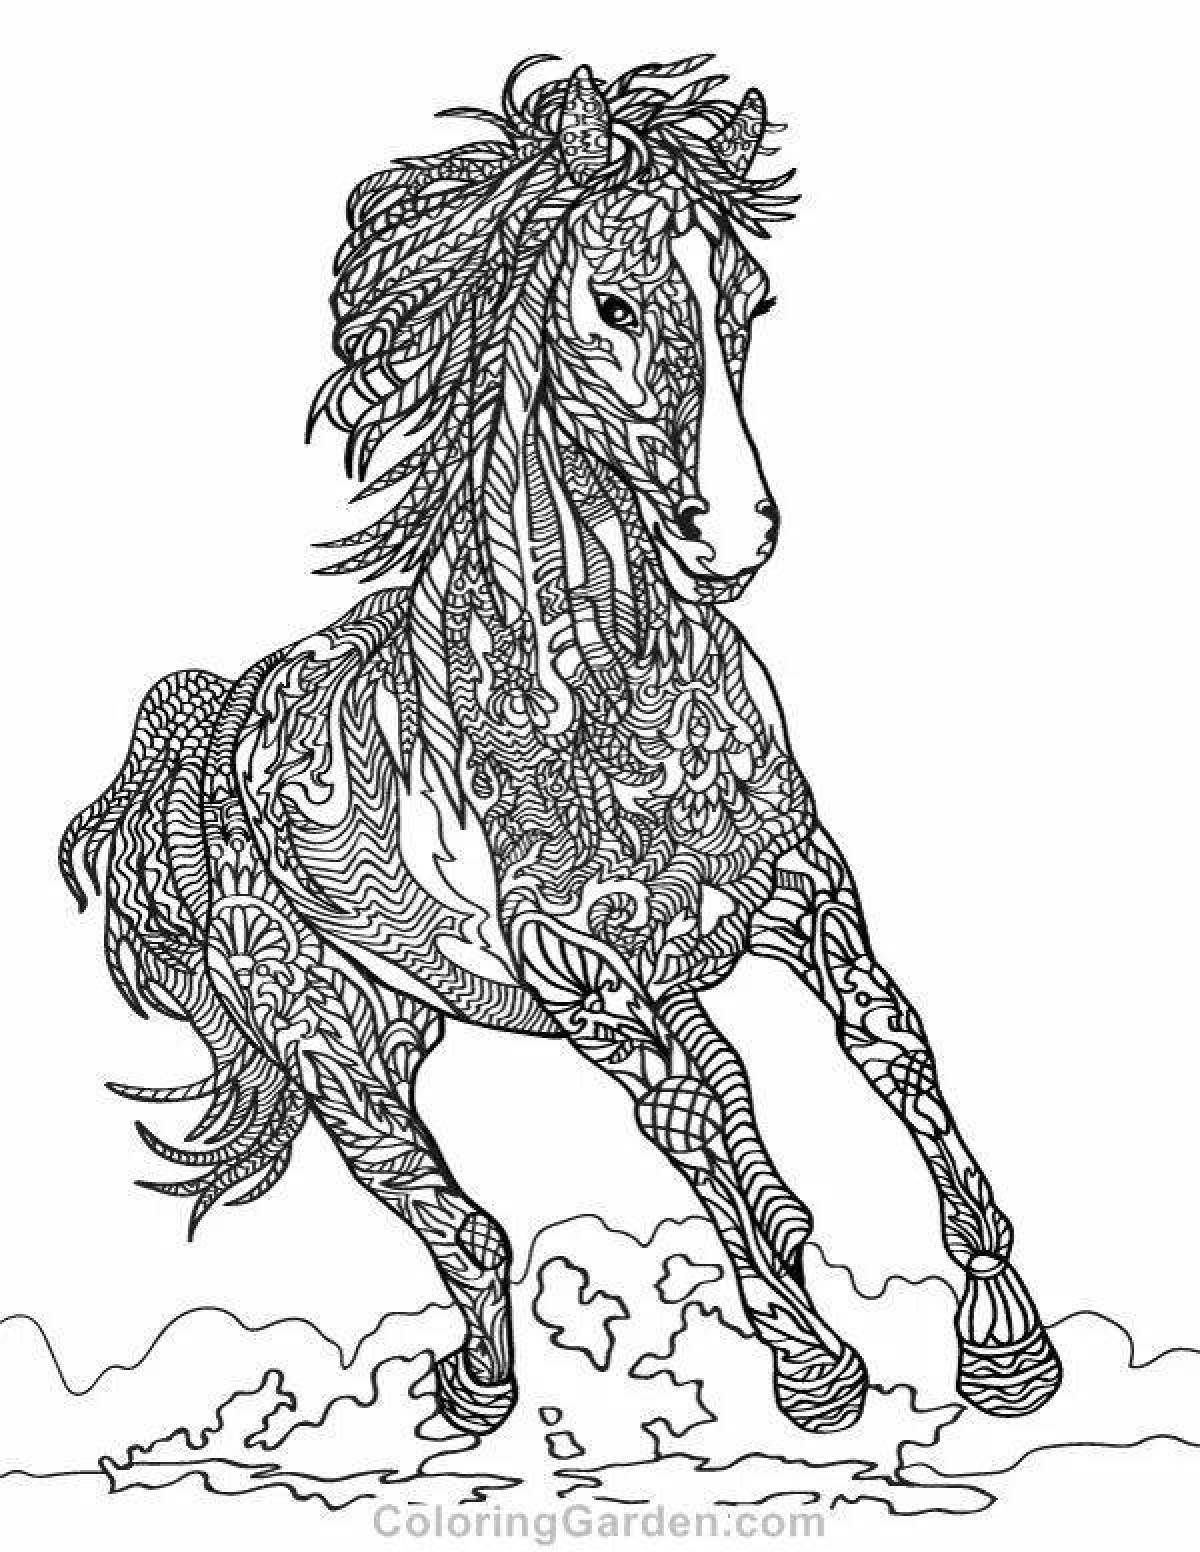 Яркая раскраска сложная лошадь